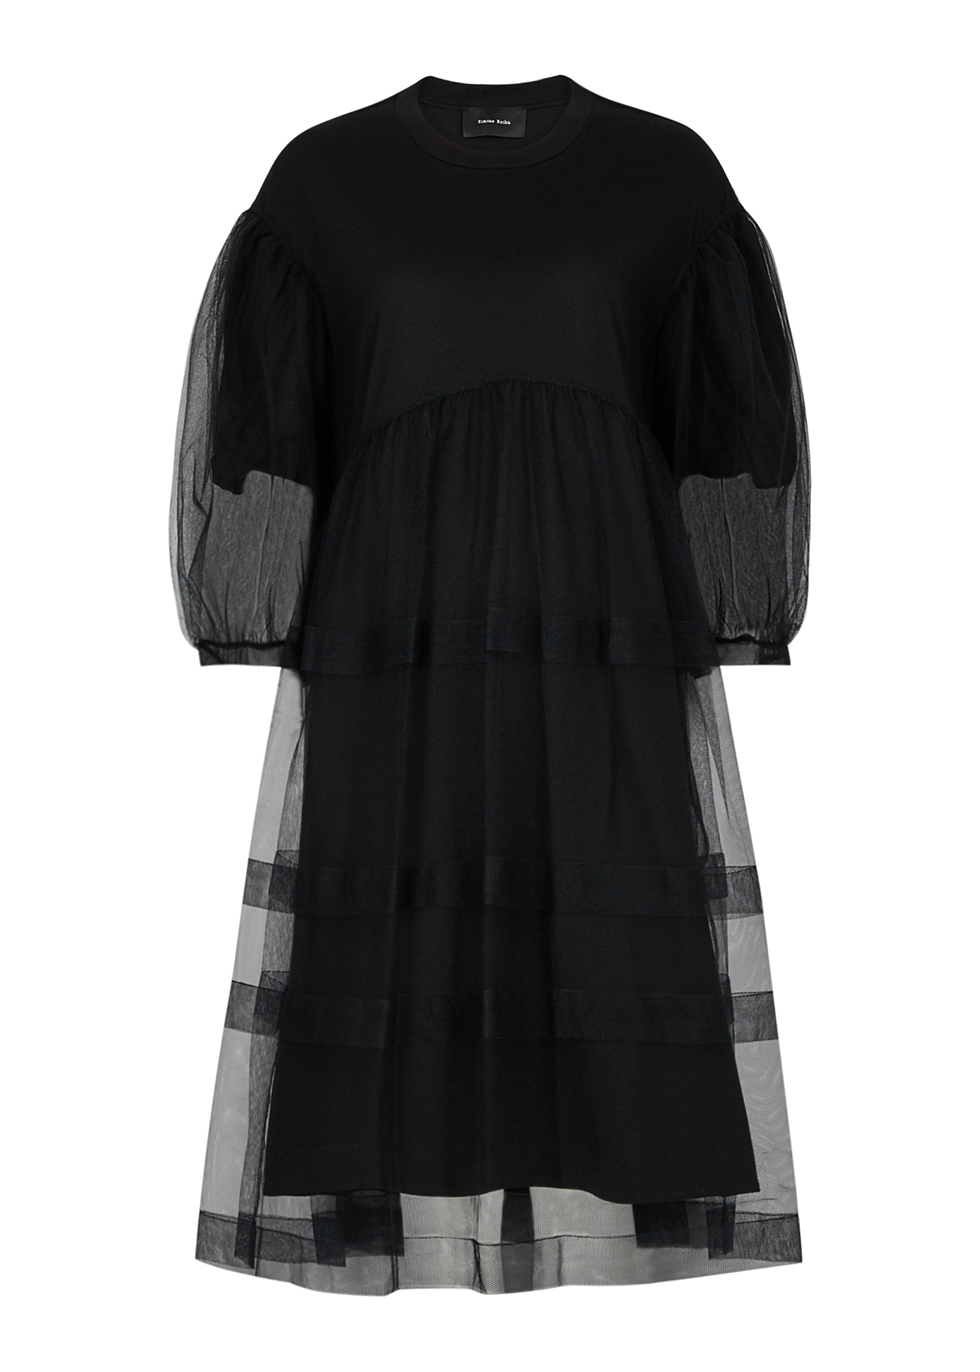 SIMONE ROCHA Black layered cotton and tulle dress